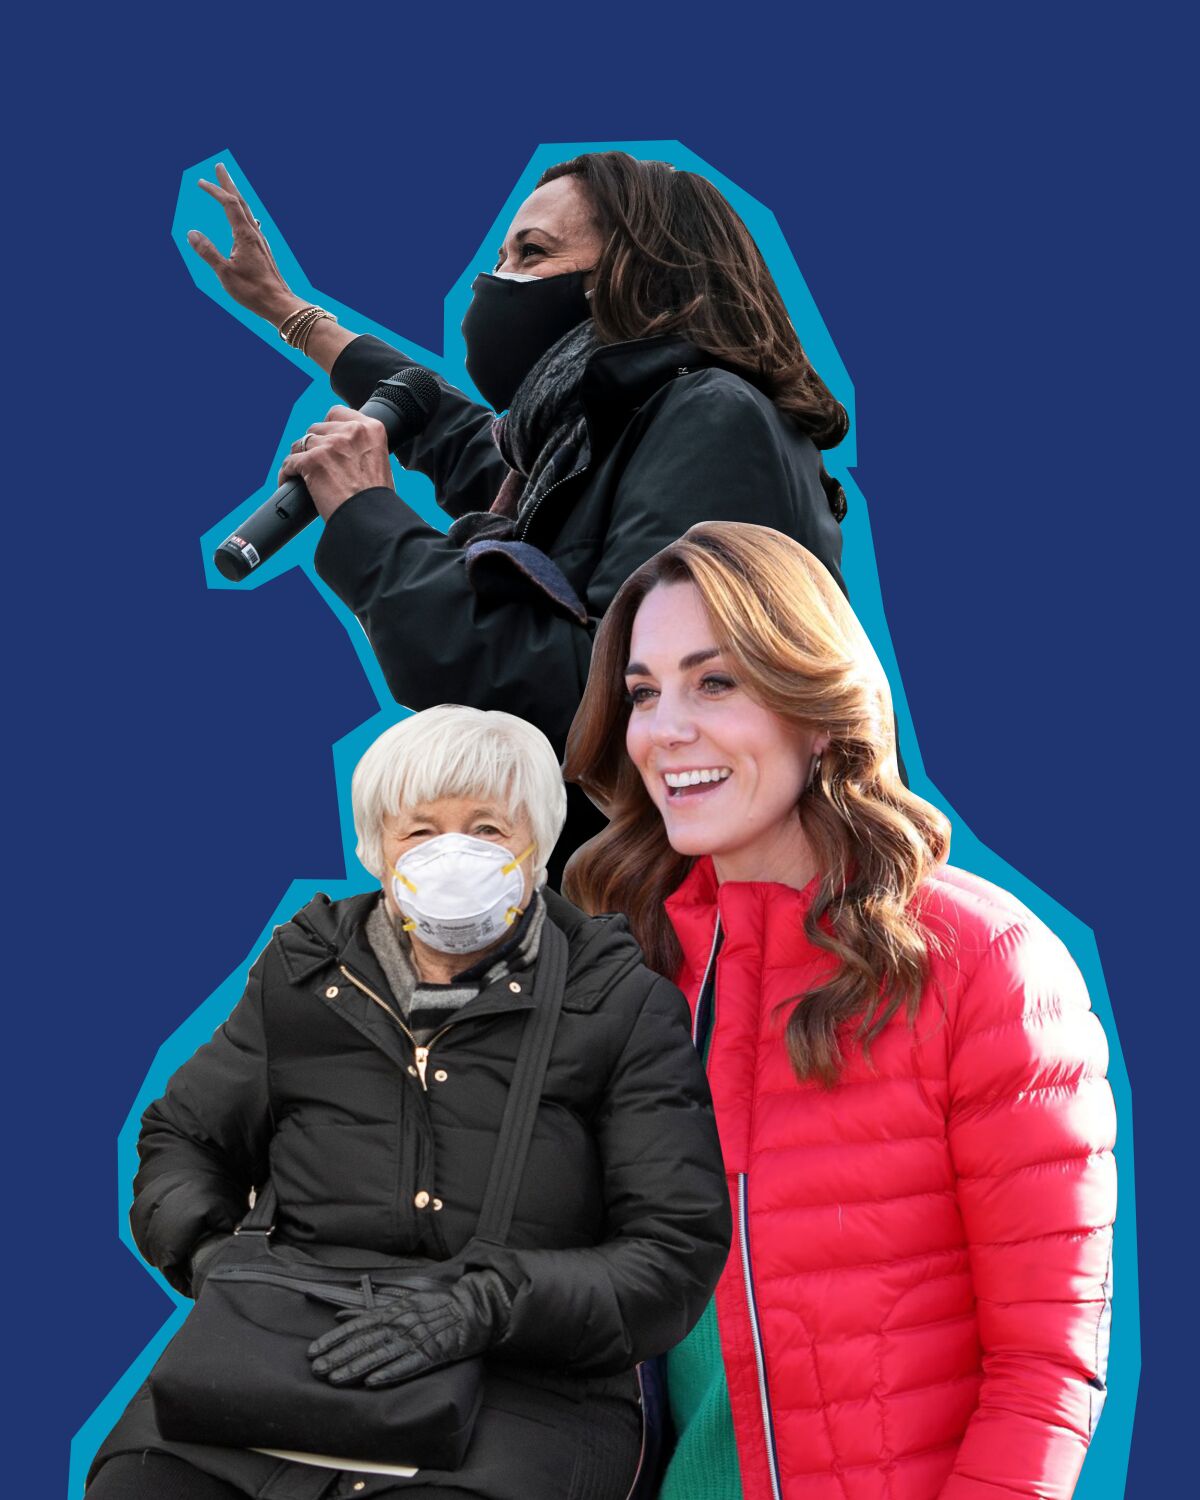 Treasury Secretary Janet Yellen, Vice President Kamala Harris and Kate Middleton all wear puffer jackets or coats.